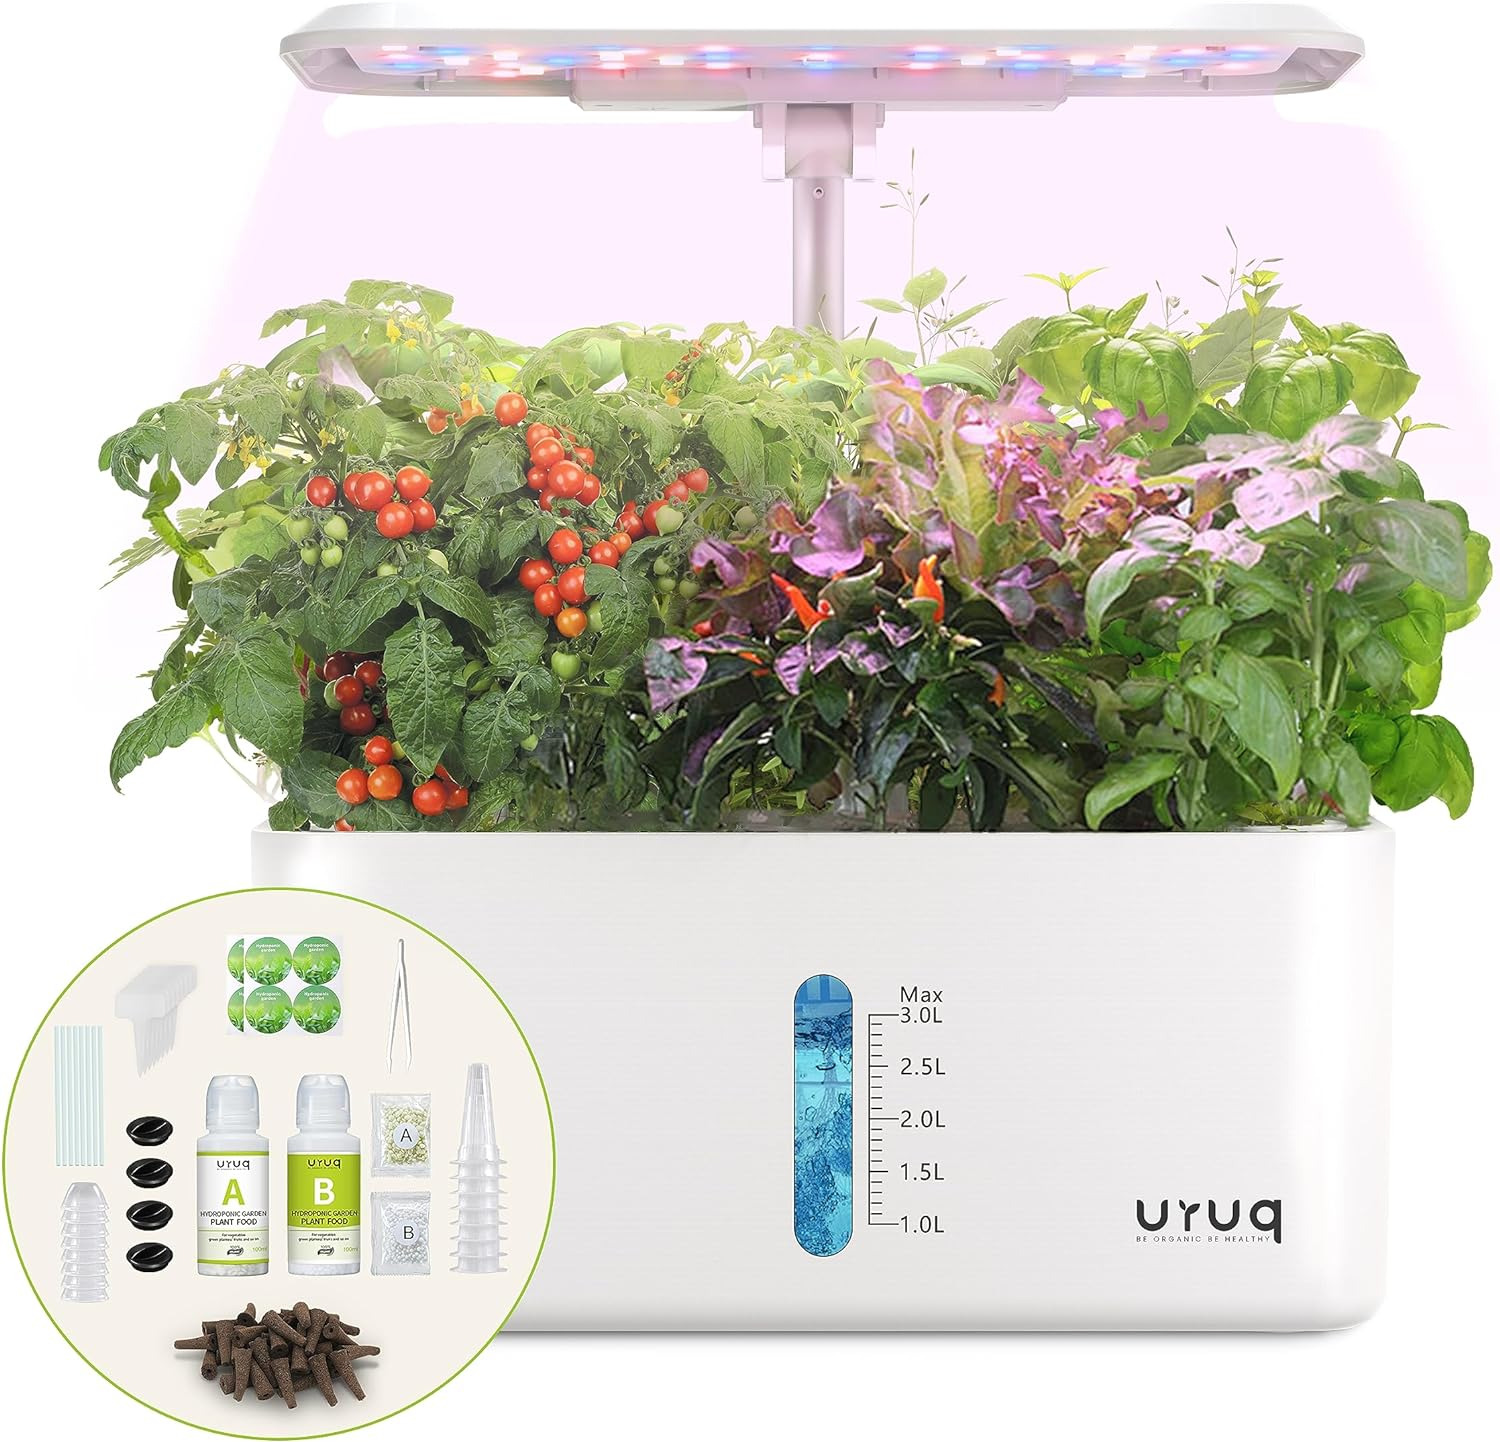 Hydroponics Growing System Indoor Garden: 8 Pods Herb Garden Kit Indoor with LED